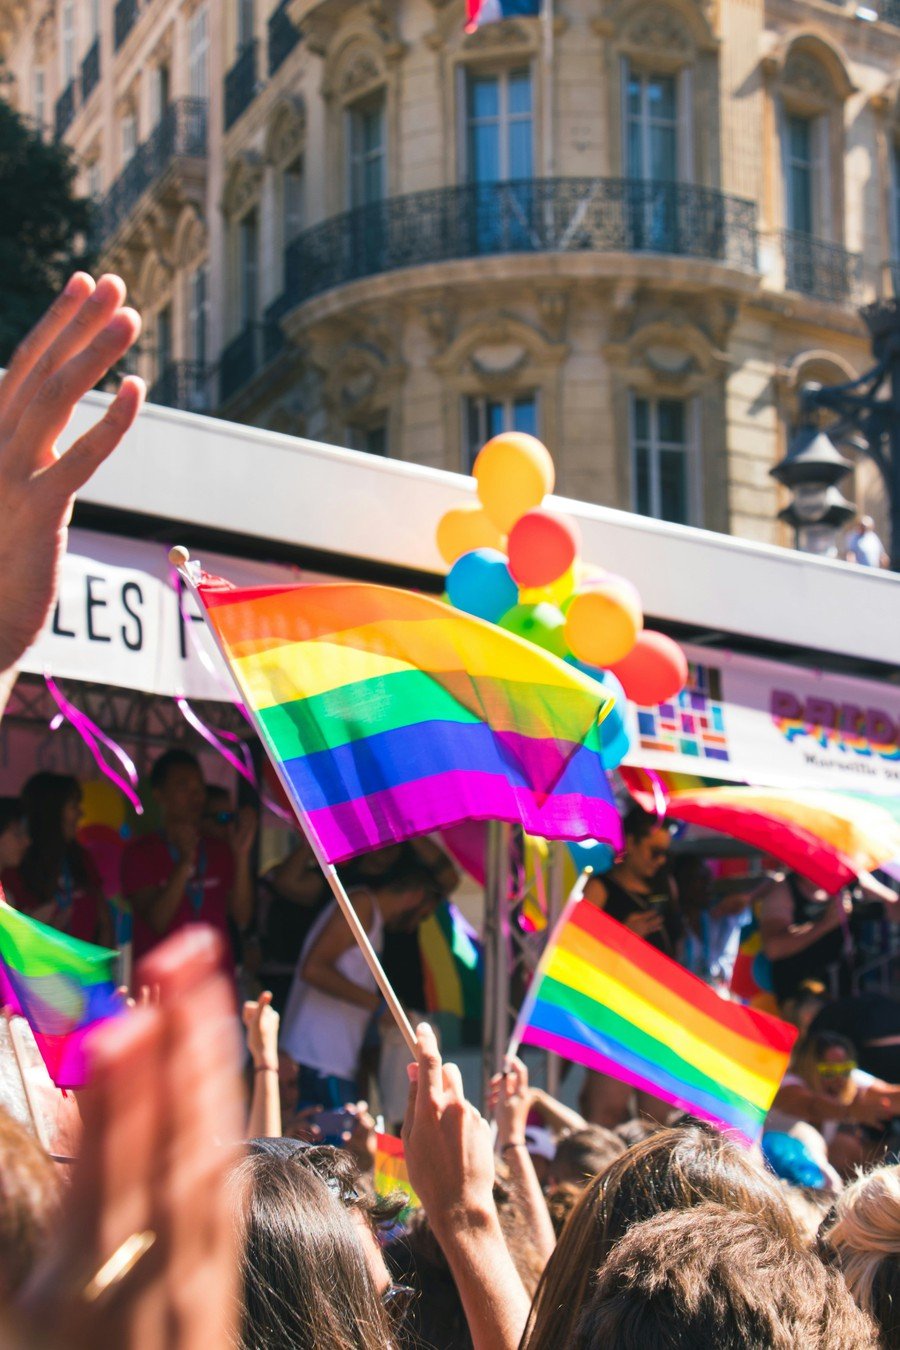 LGBTQIA+ Pride Parade, photo by Tristan B. in Unsplash